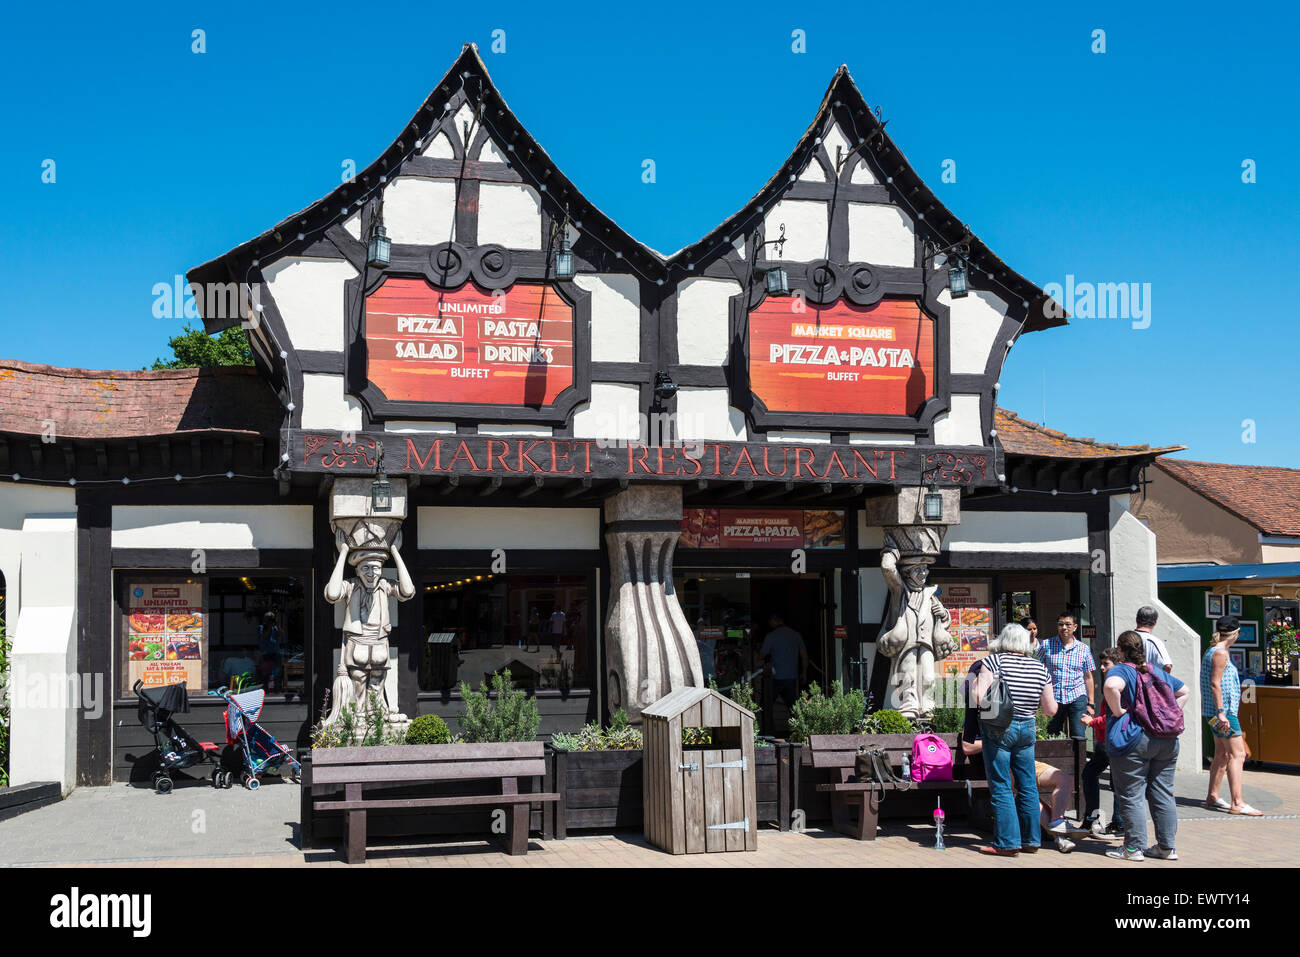 Market Restaurant, Market Square, Chessington World of Adventures Theme Park, Chessington, Surrey, England, United Kingdom Stock Photo